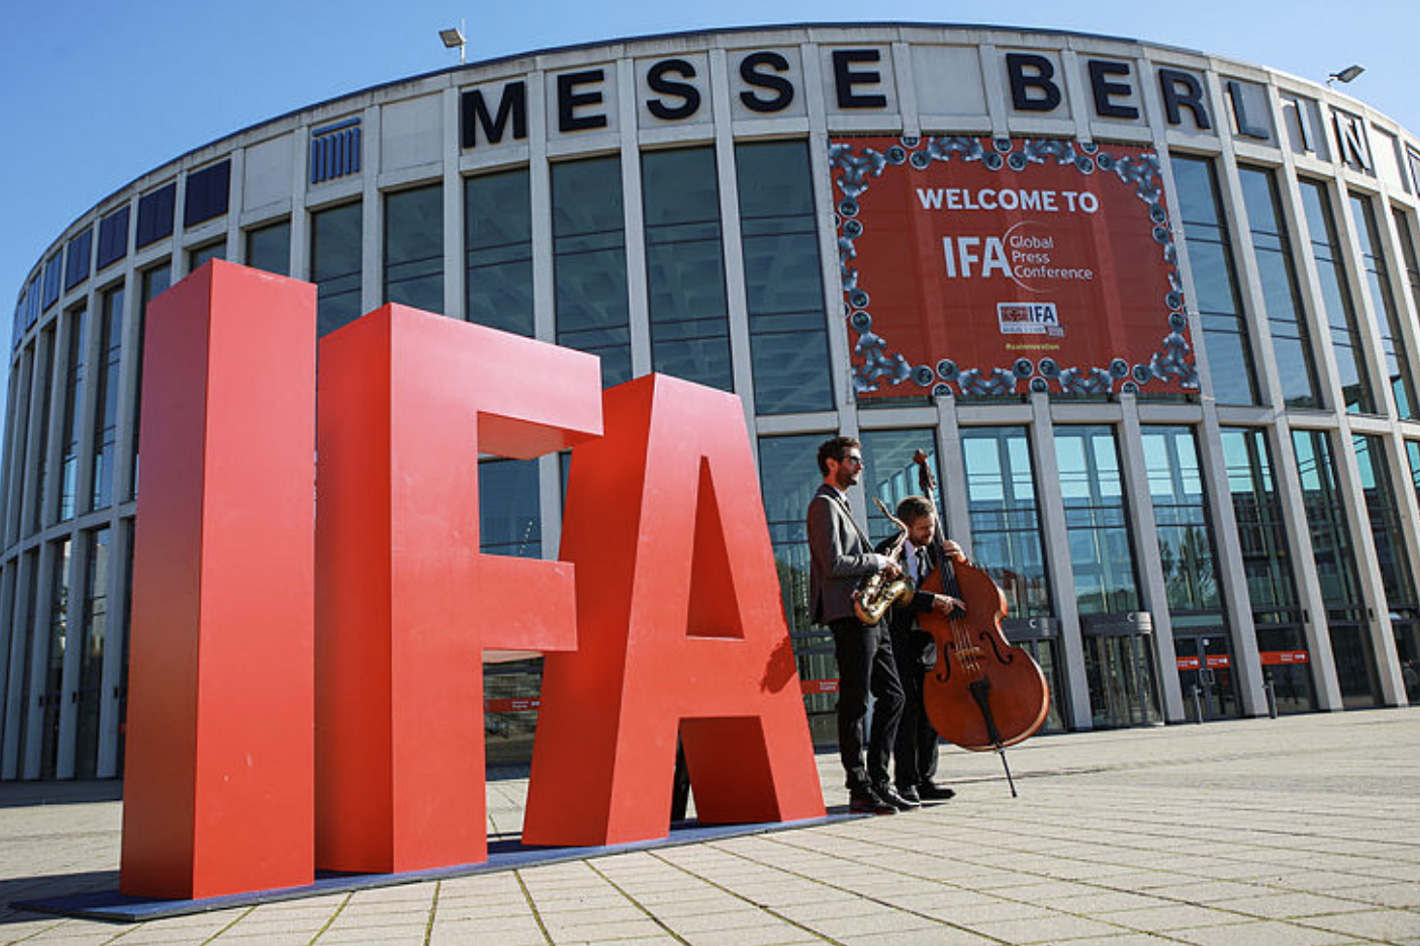 IFA Berlin 2022: full-size trade show returns in September